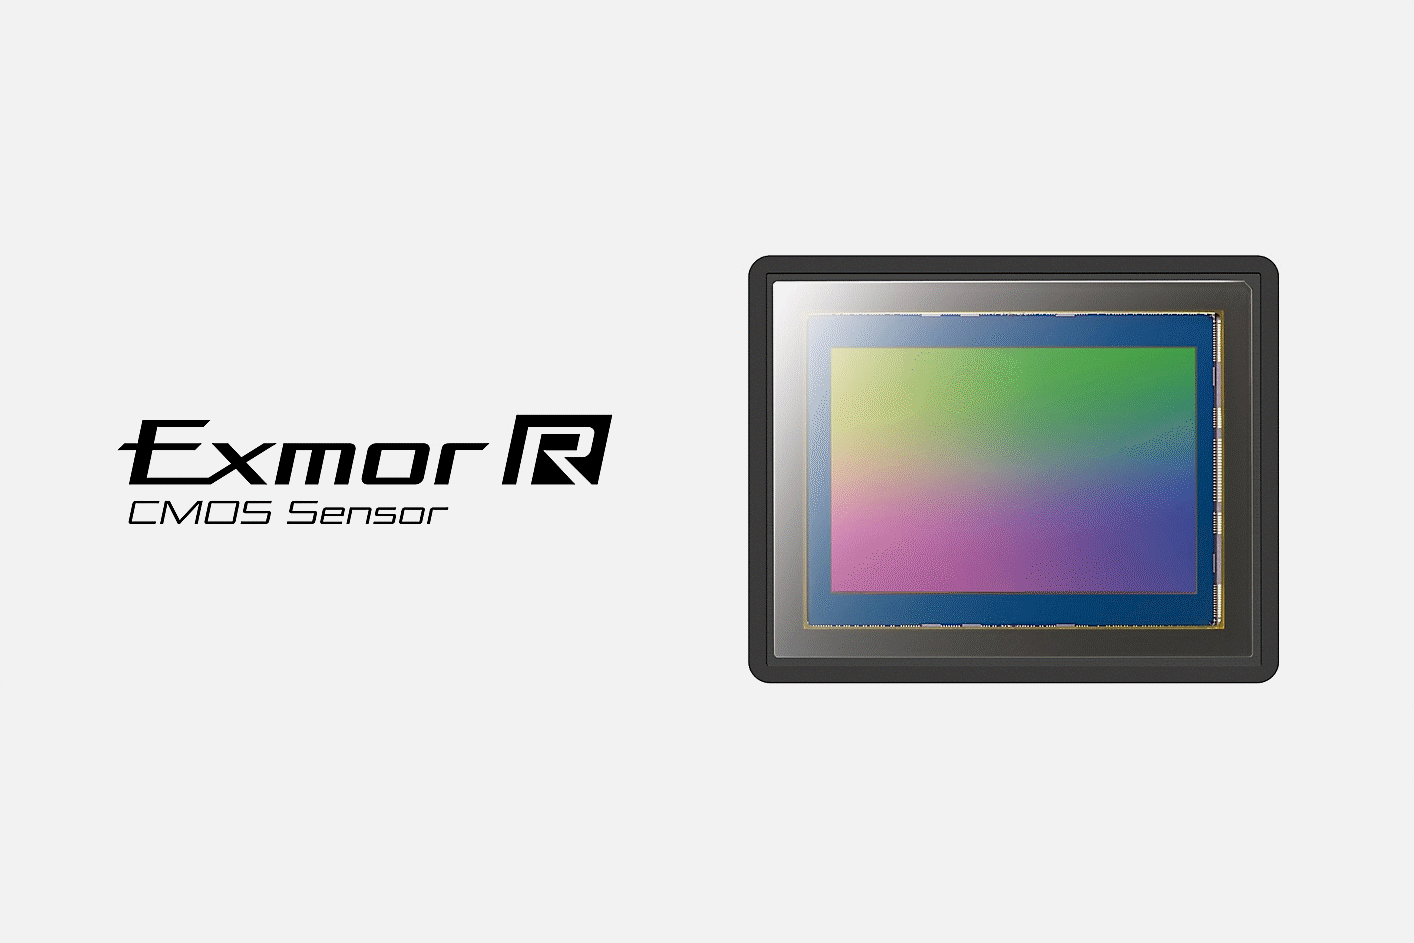 Abbildung des Exmor R CMOS-Bildsensors